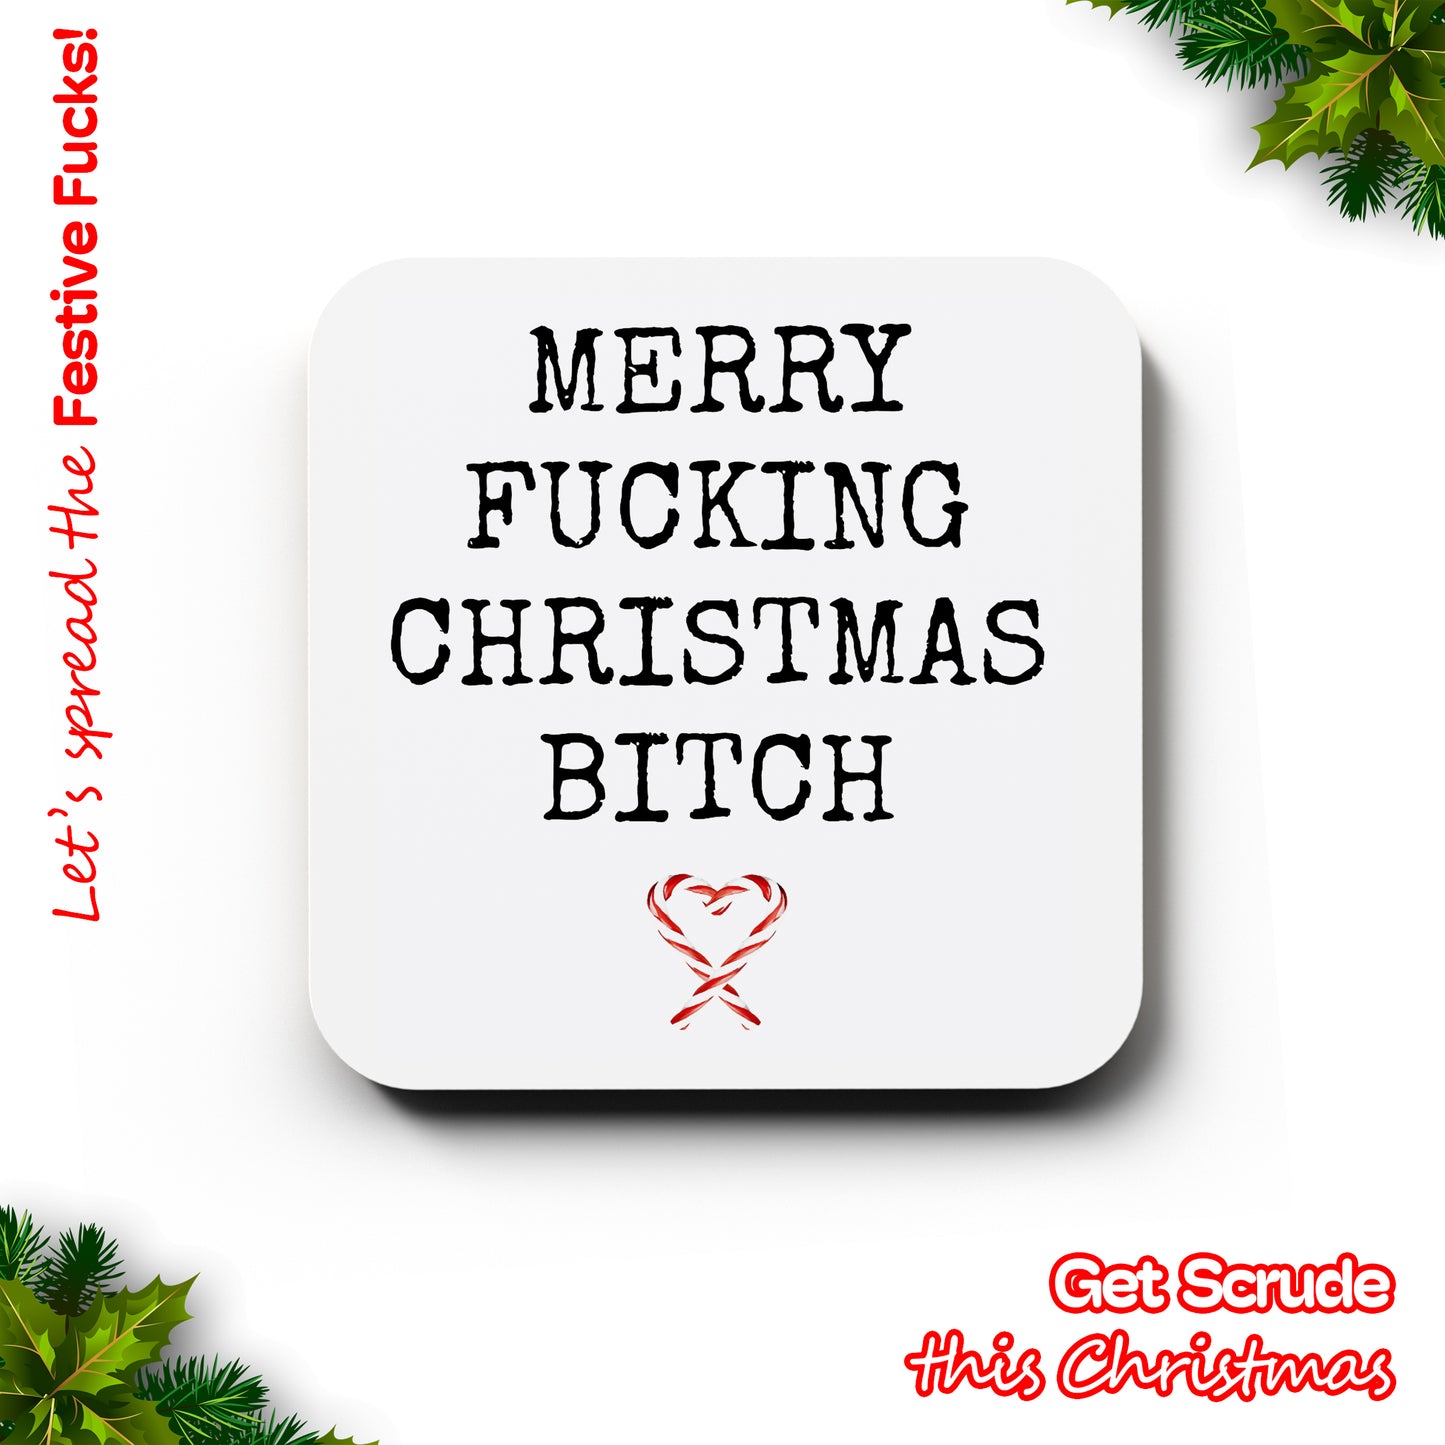 Merry Fucking Christmas Bitch